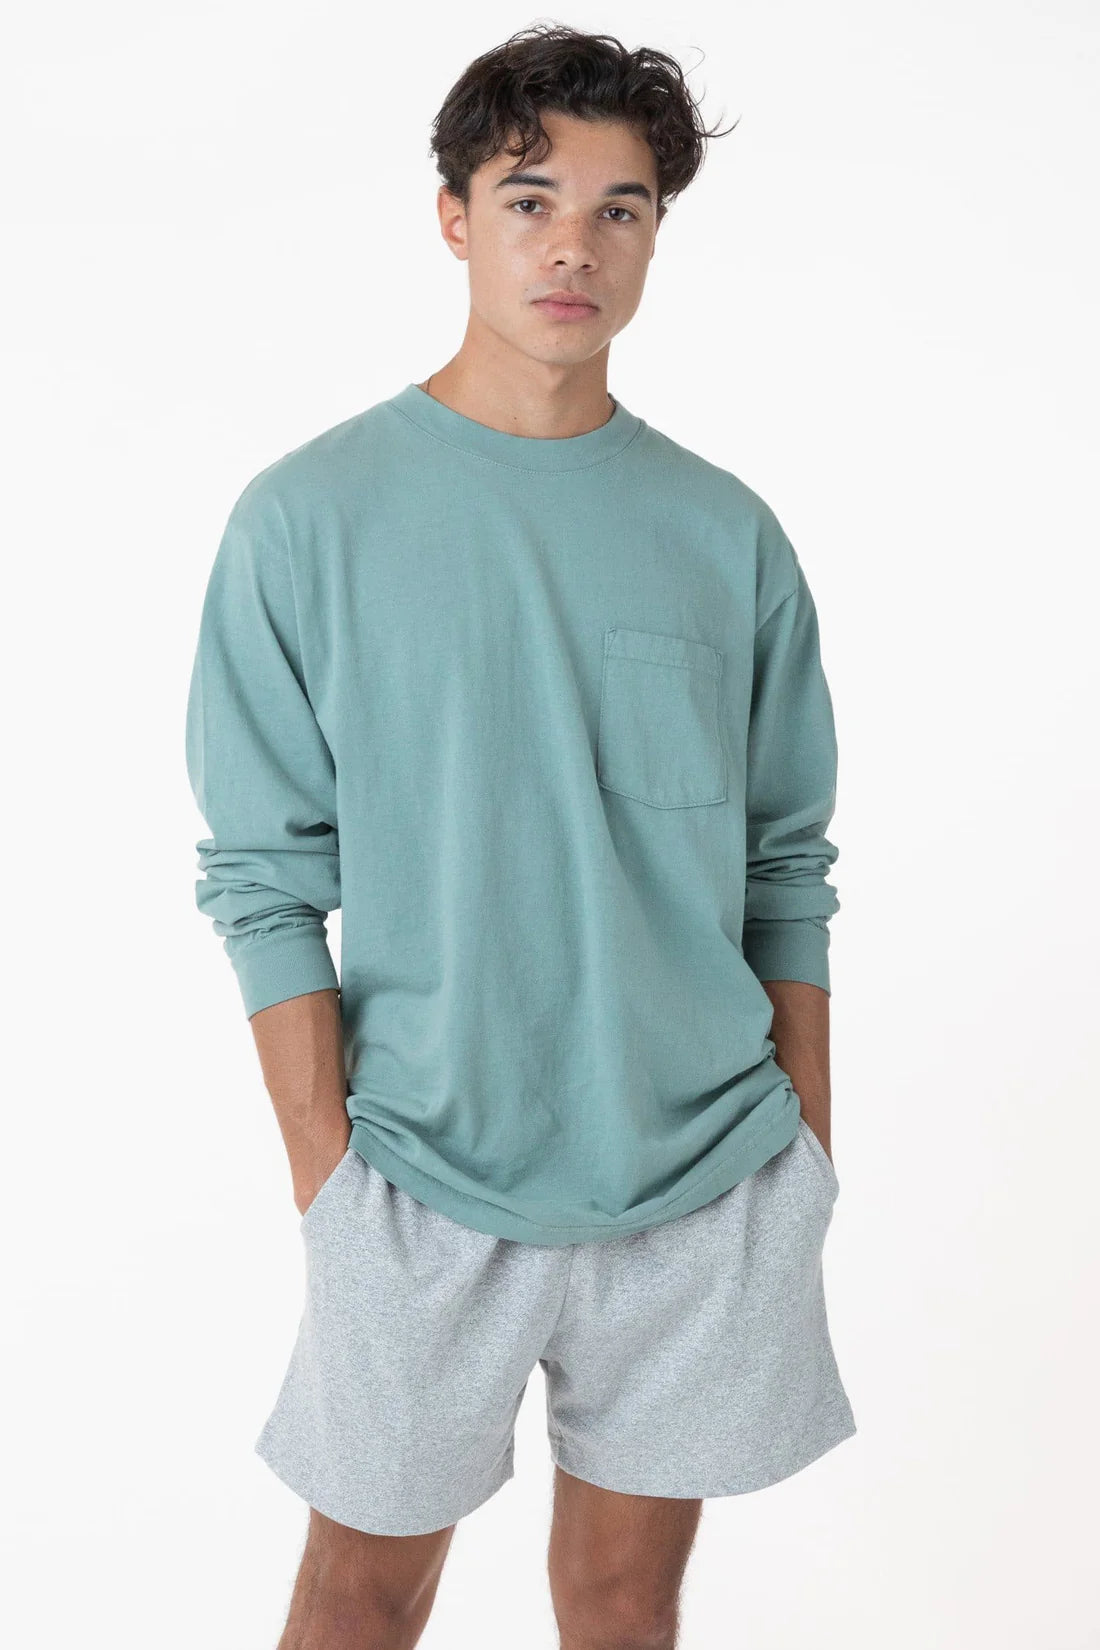 Los Angeles Apparel - 1810GD - Long Sleeve Garment Dye Pocket T-Shirt